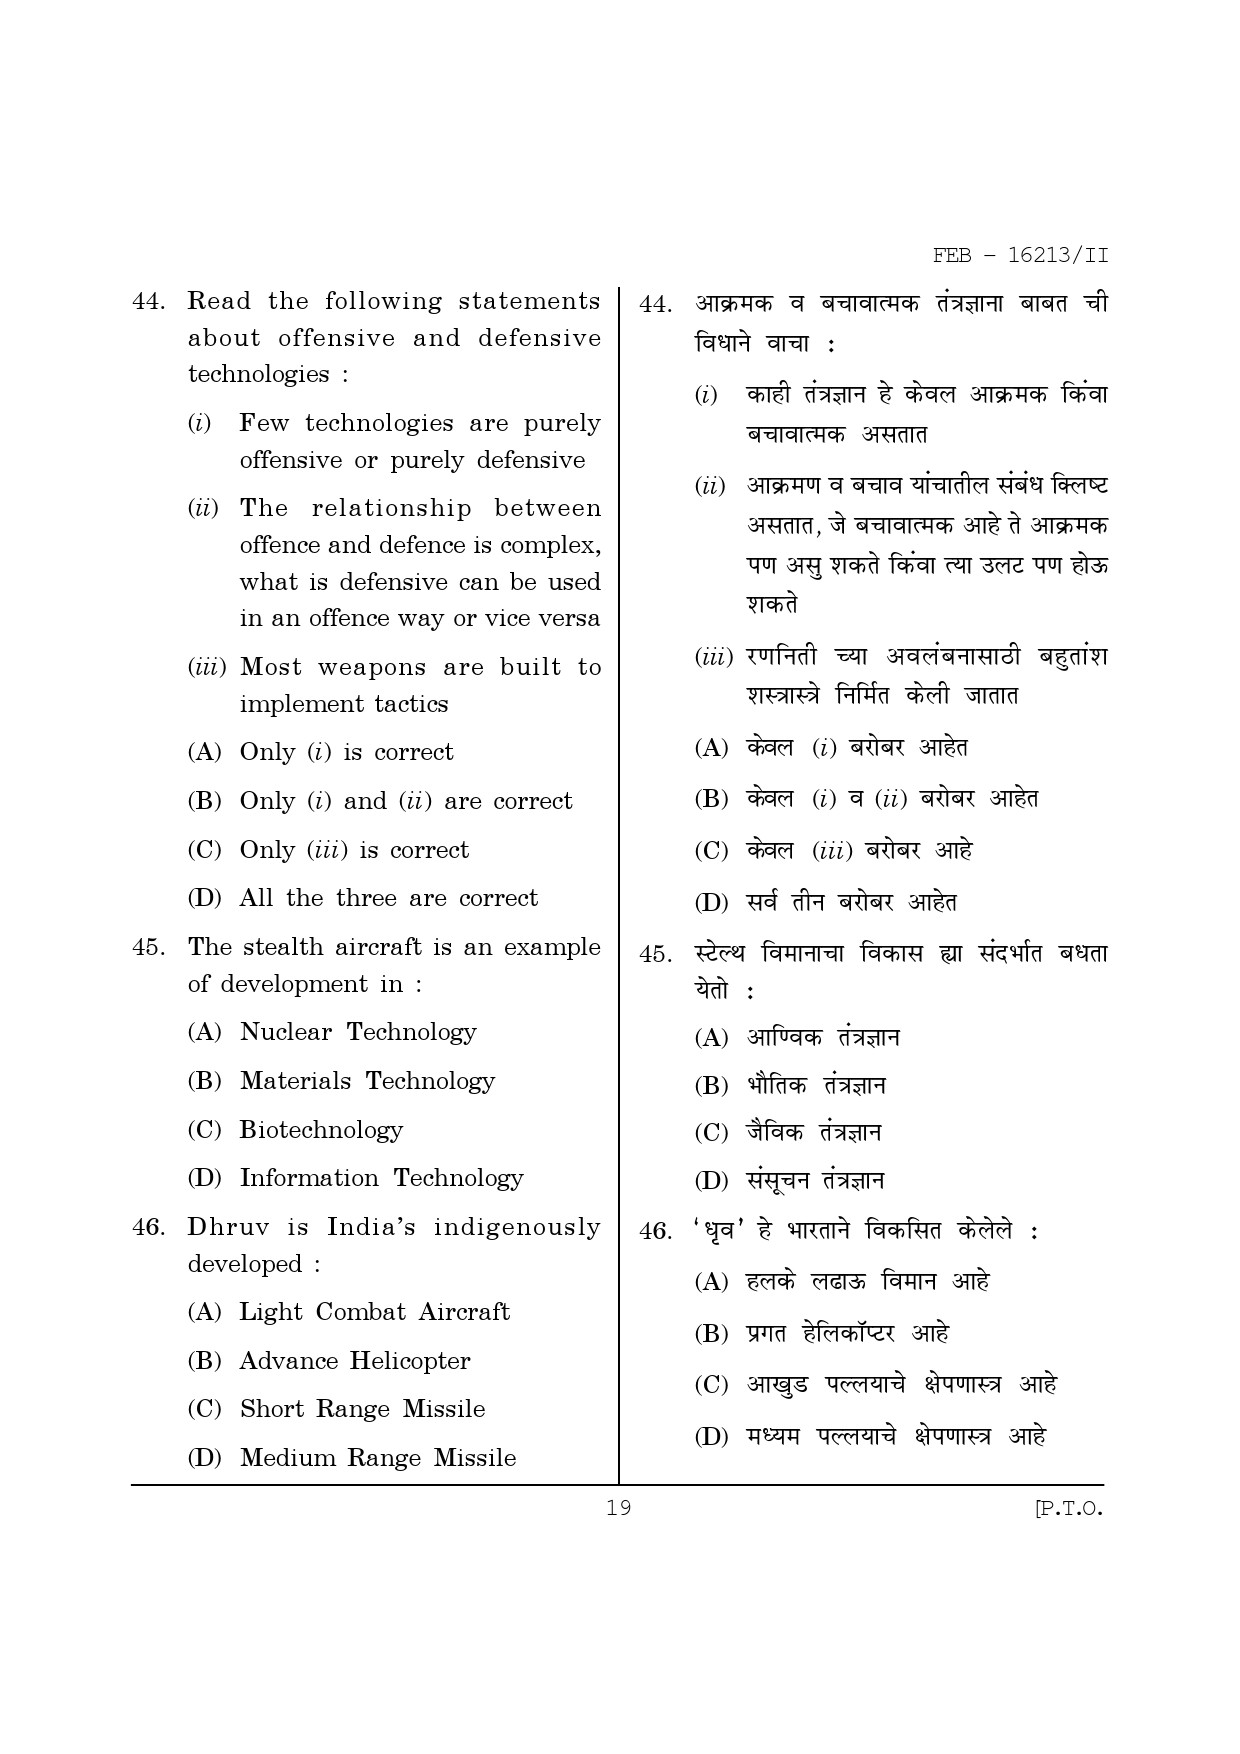 Maharashtra SET Defence and Strategic Studies Question Paper II February 2013 19